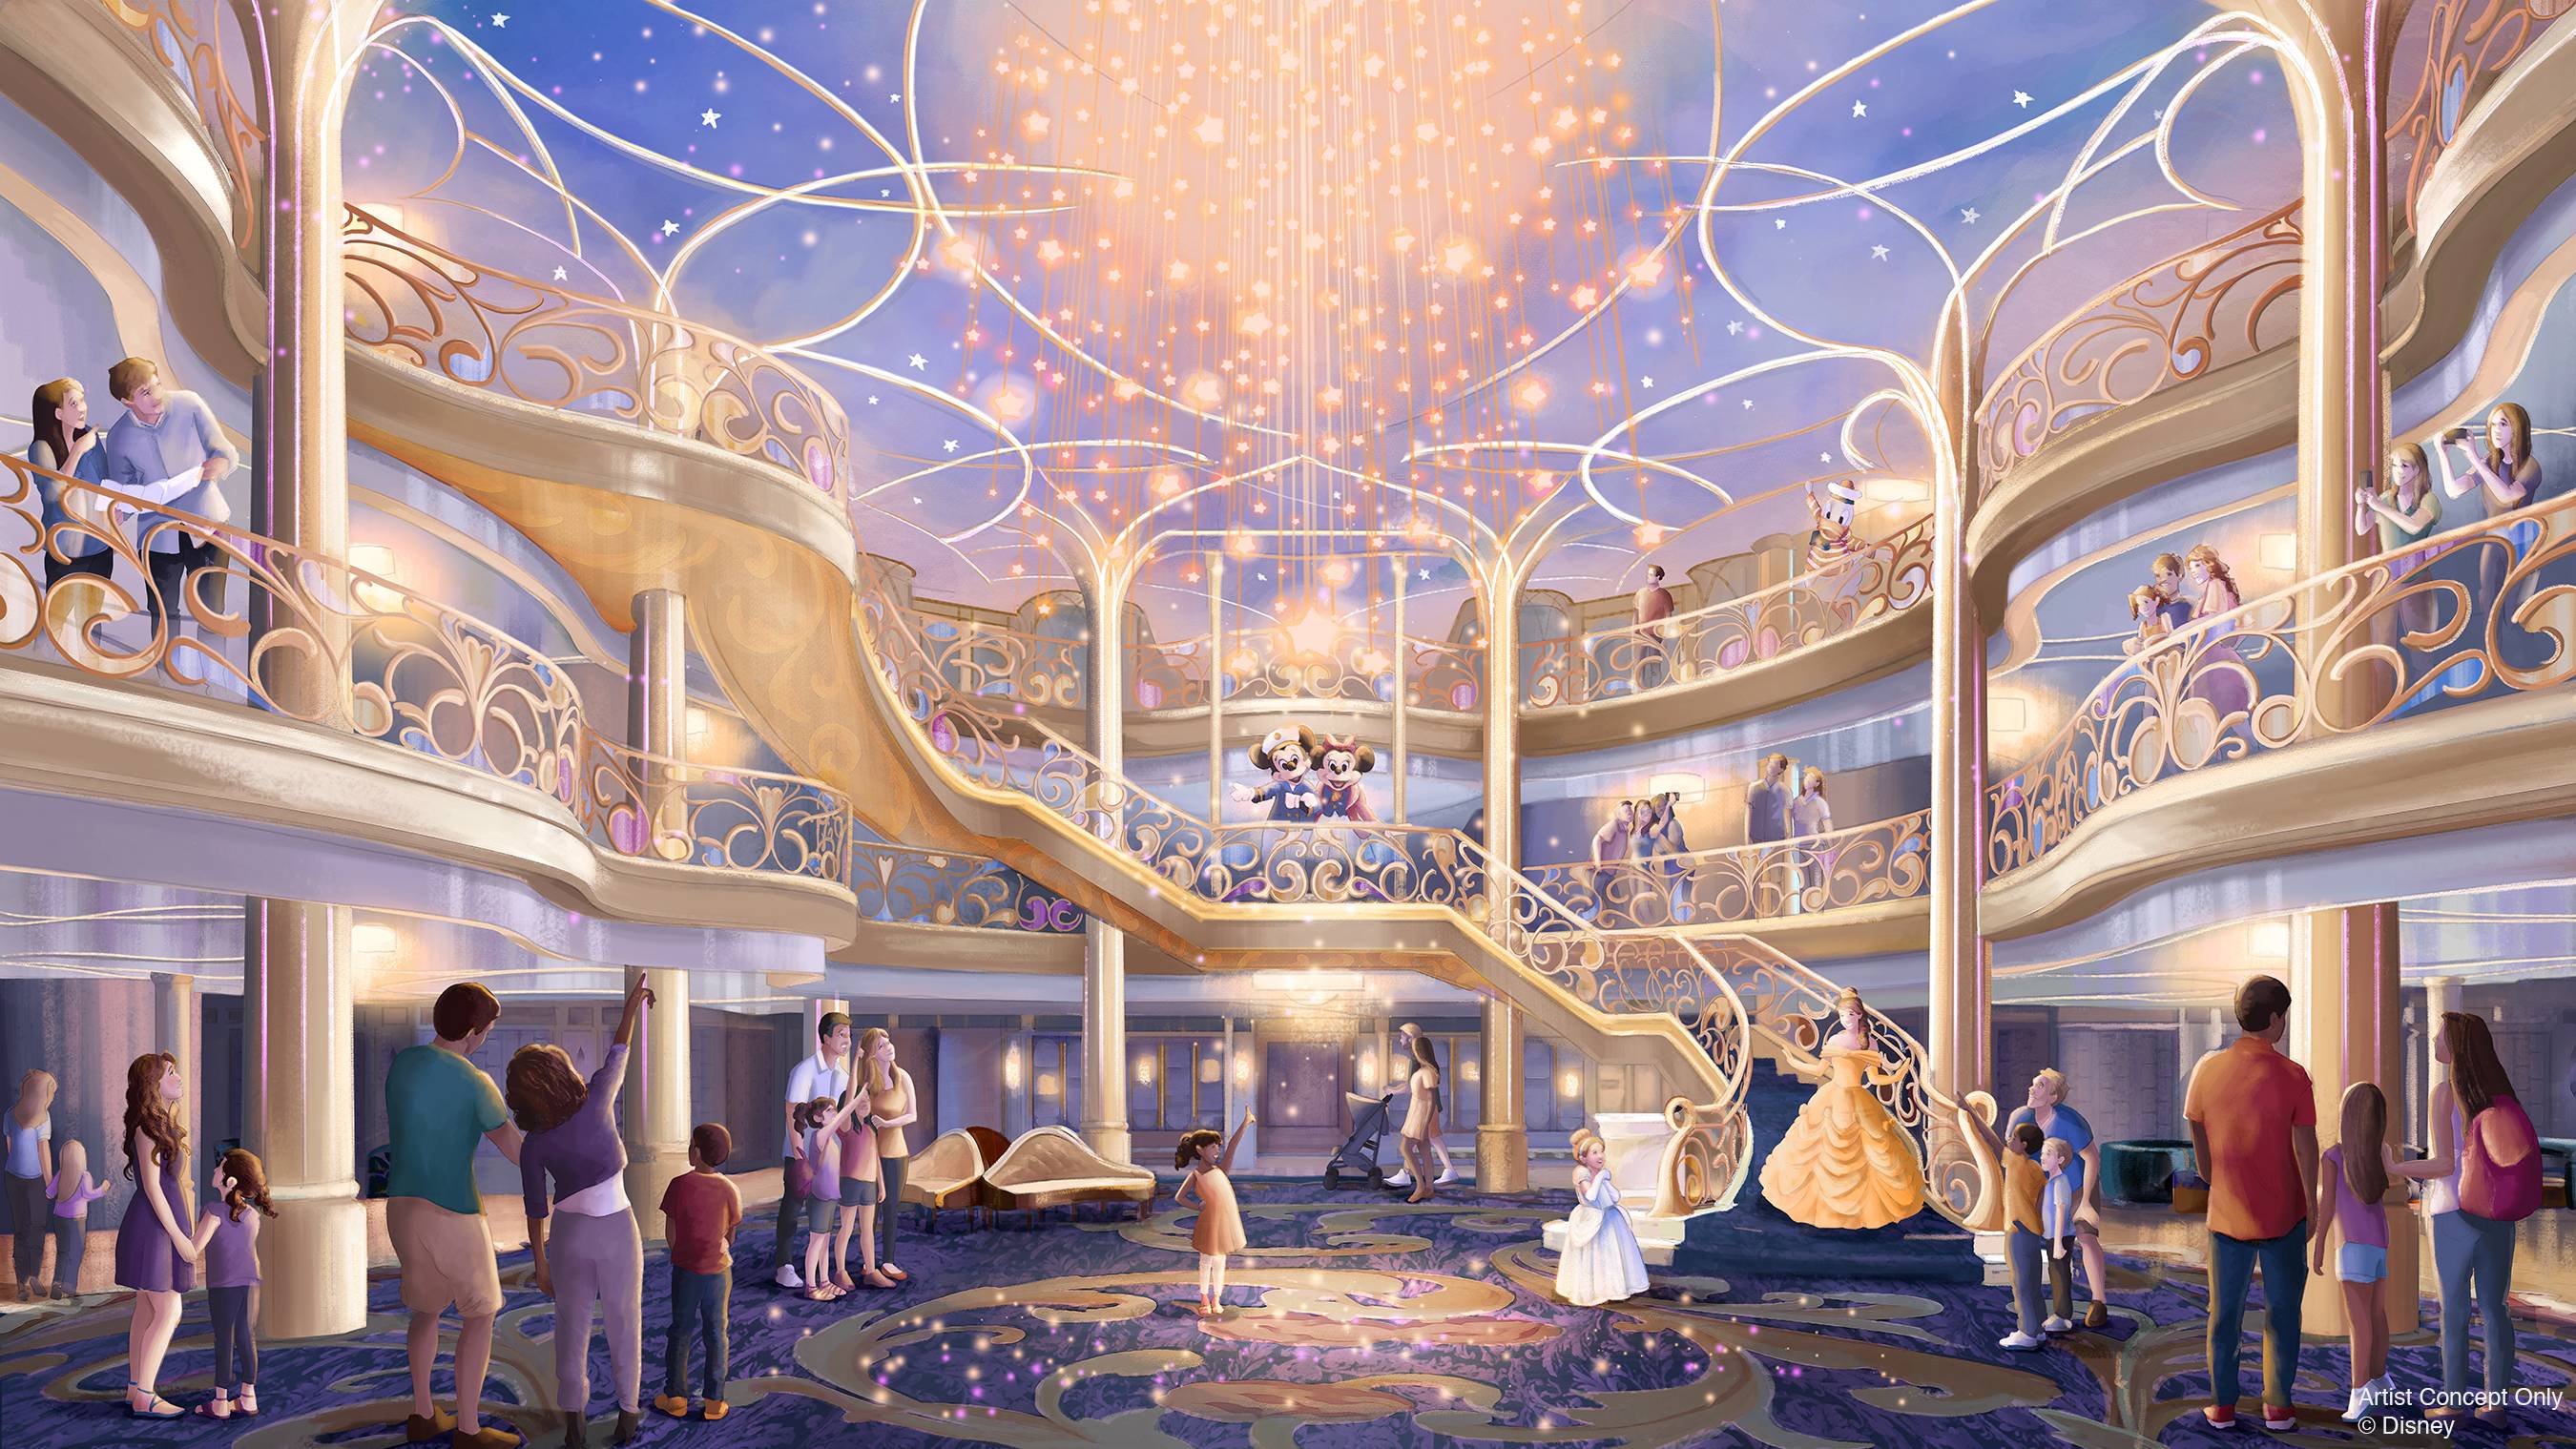 The Disney Wish will set sail in 2022